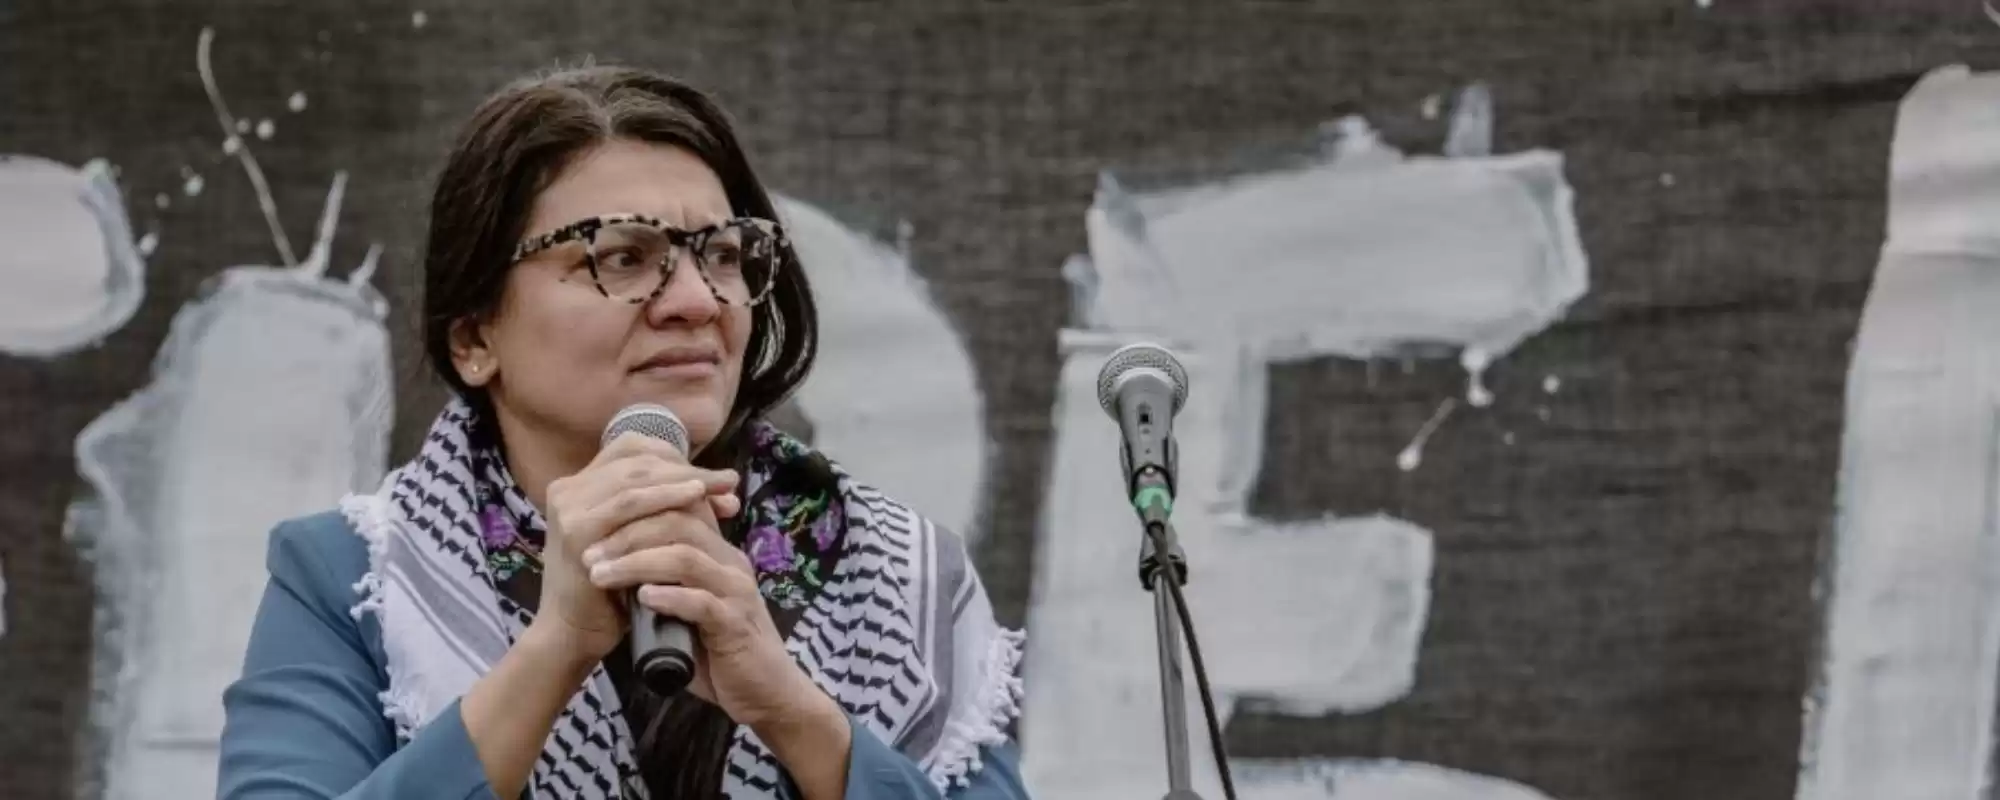 La representante demócrata Rashida Tlaib censura la Cámara de Representantes